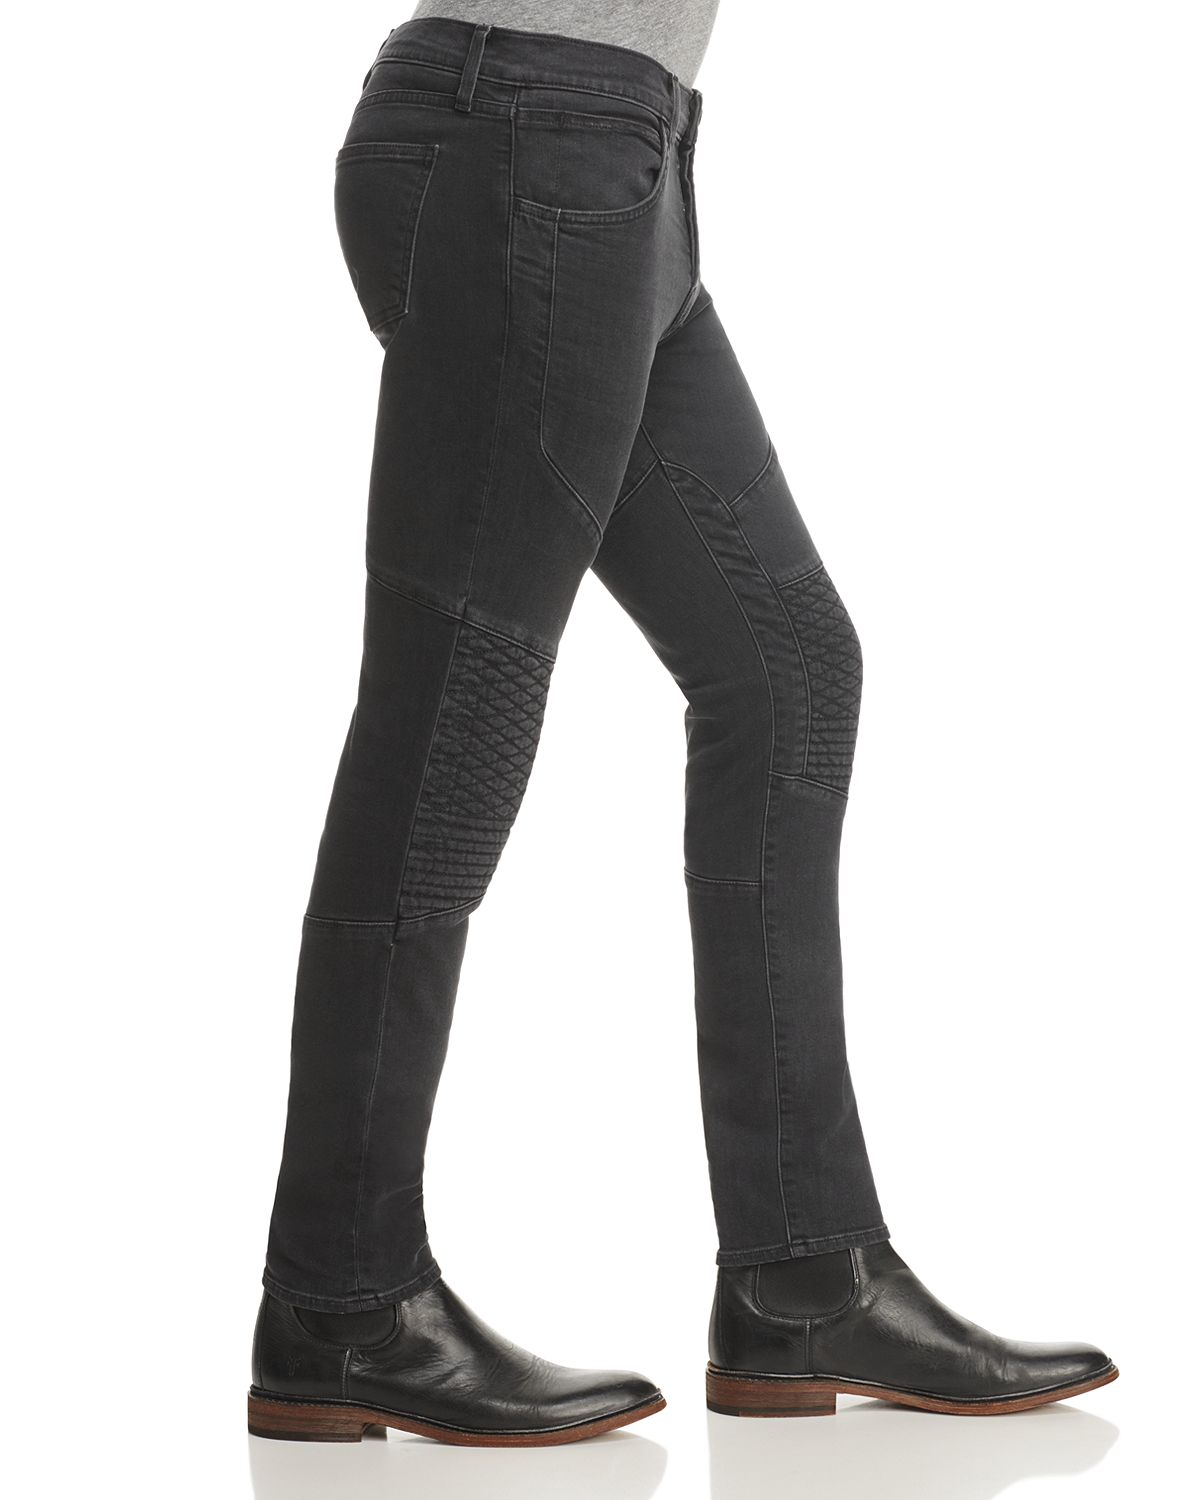 J Brand Bearden Moto Super Slim Fit Jeans In Washed Black Alpha Gray